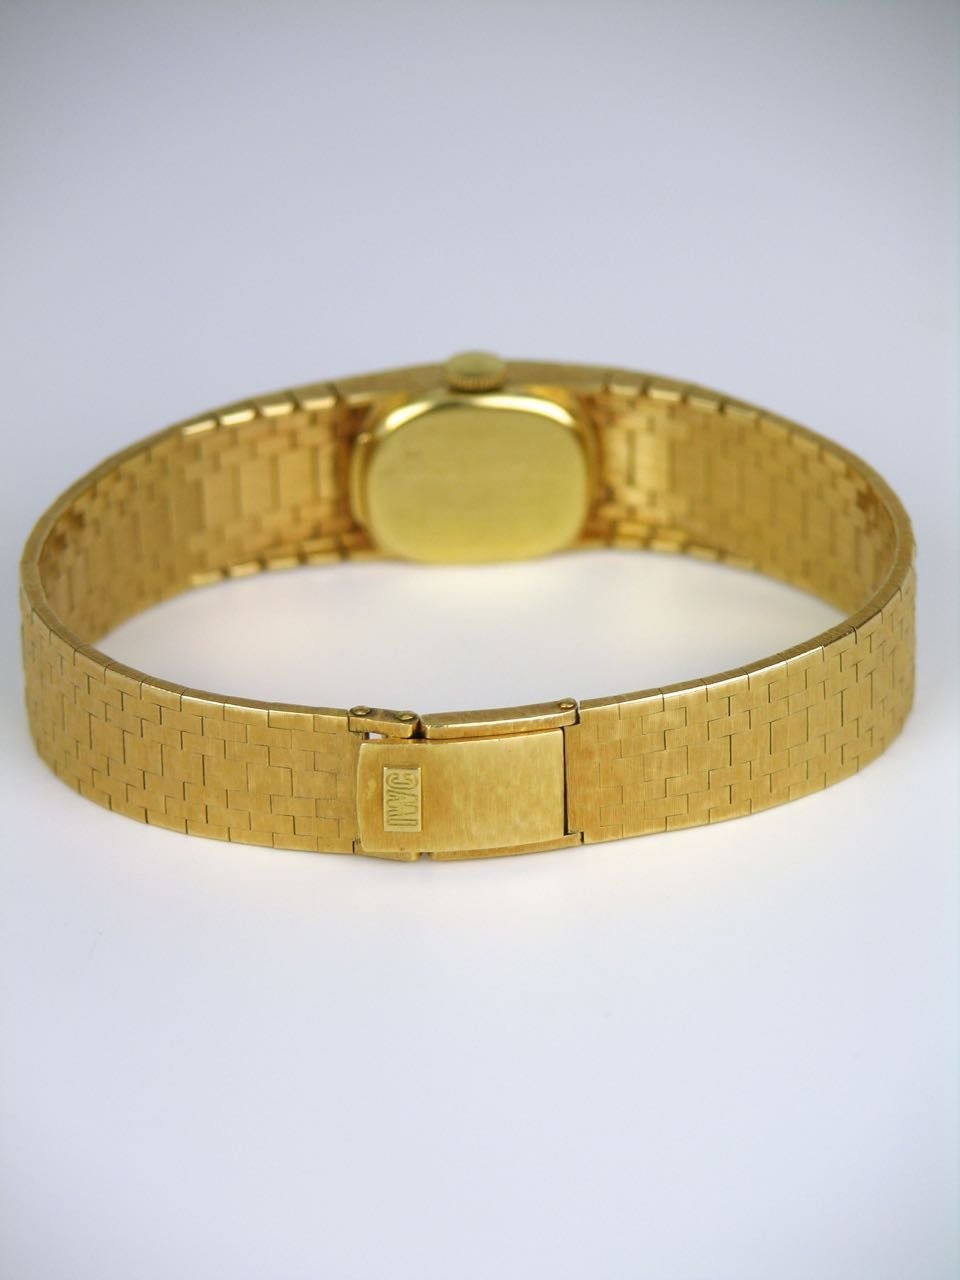 Modernist International Watch Company Lady's Yellow gold dress Wristwatch For Sale